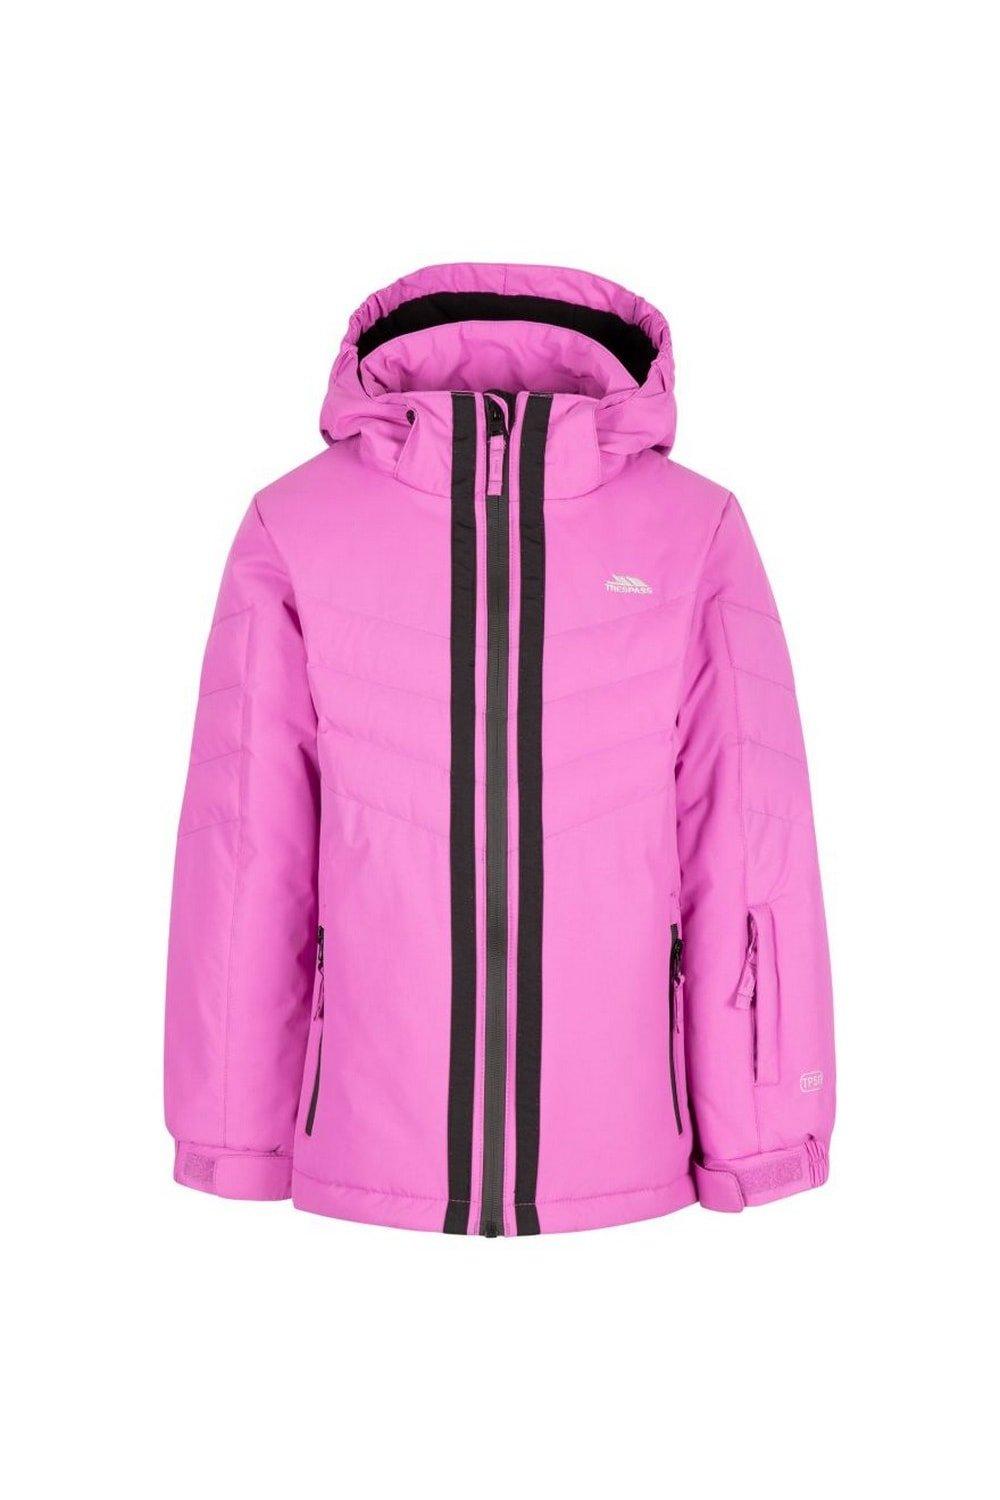 Лыжная куртка Annalisa Trespass, розовый